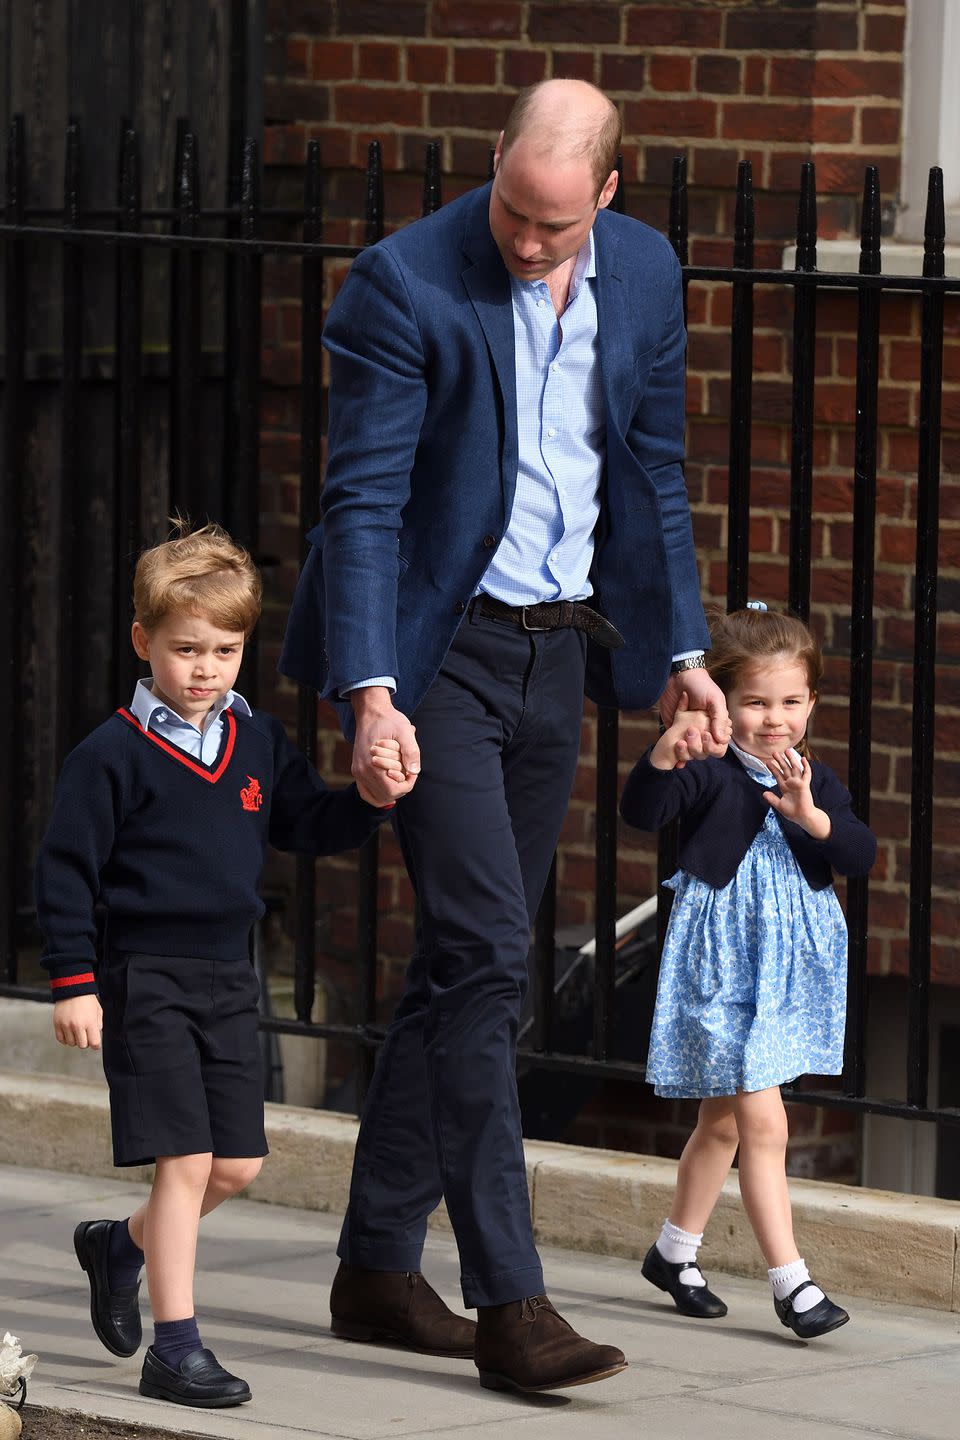 Prince George, Prince William, and Princes Charlotte